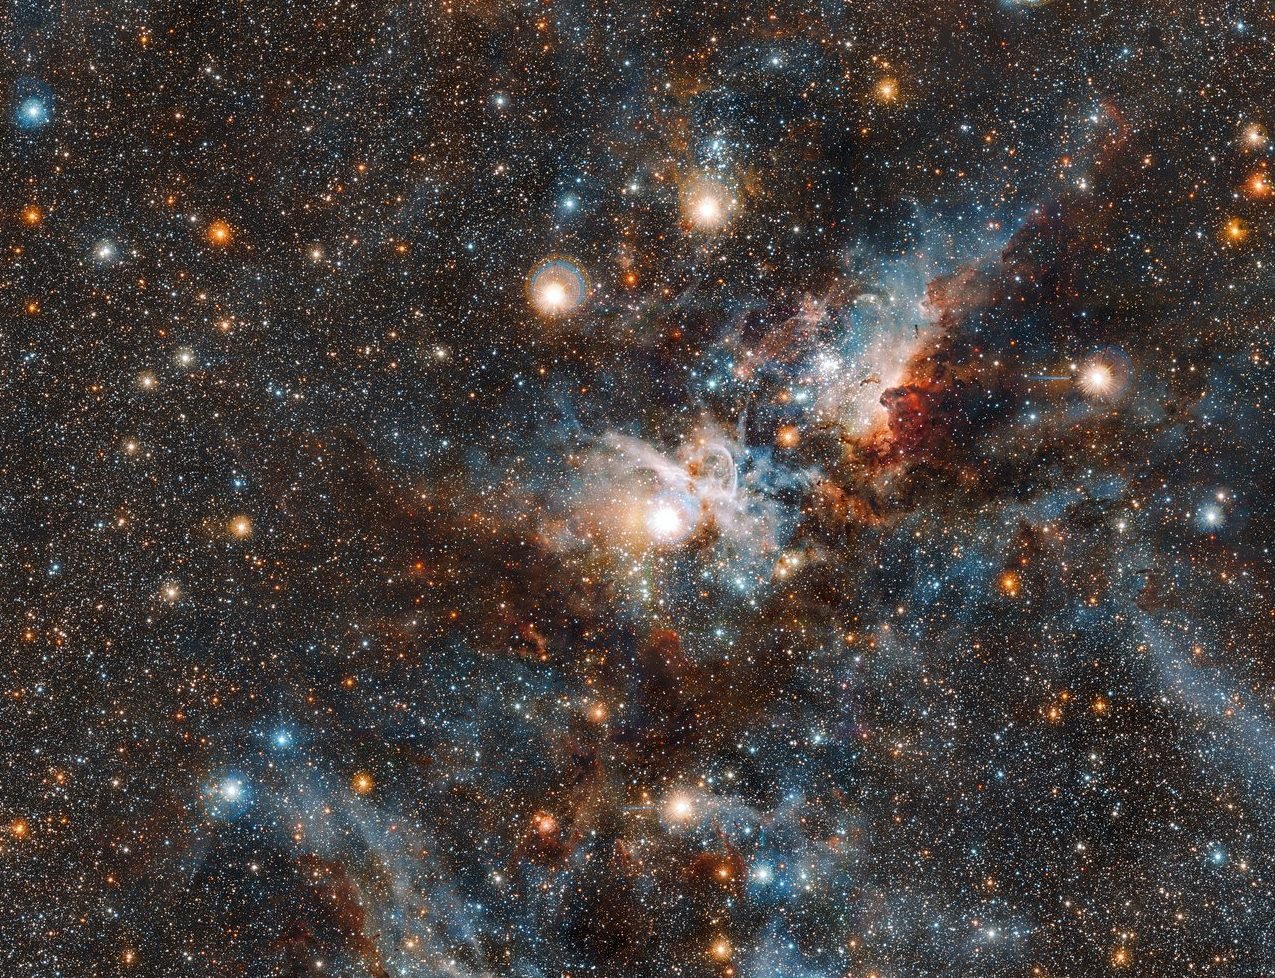 The Carina Nebula in infrared light